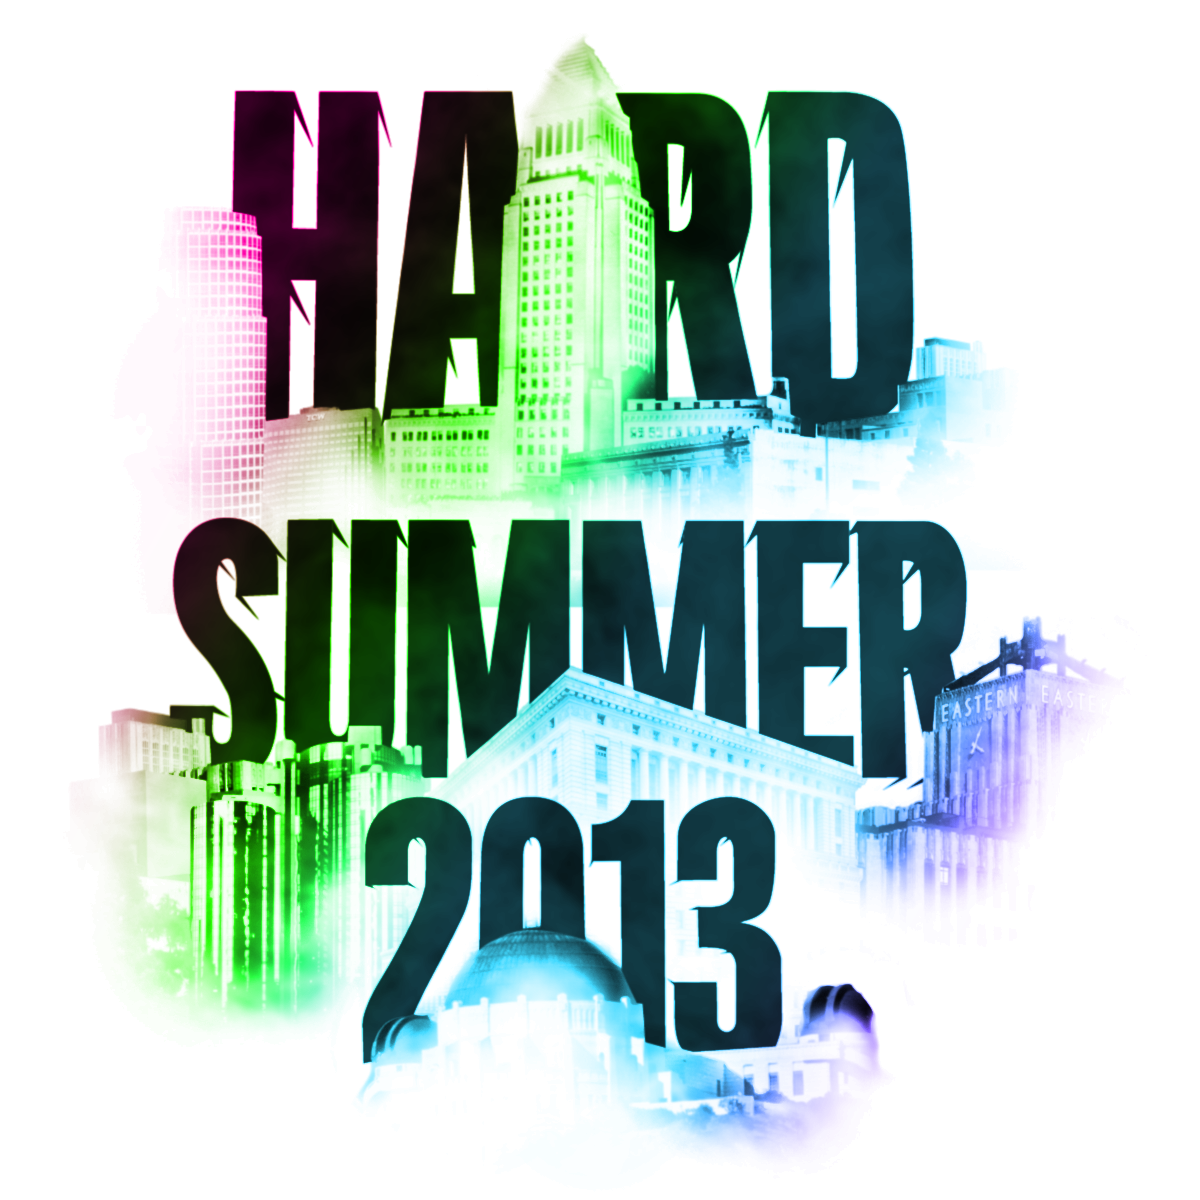 HARD Summer 2013